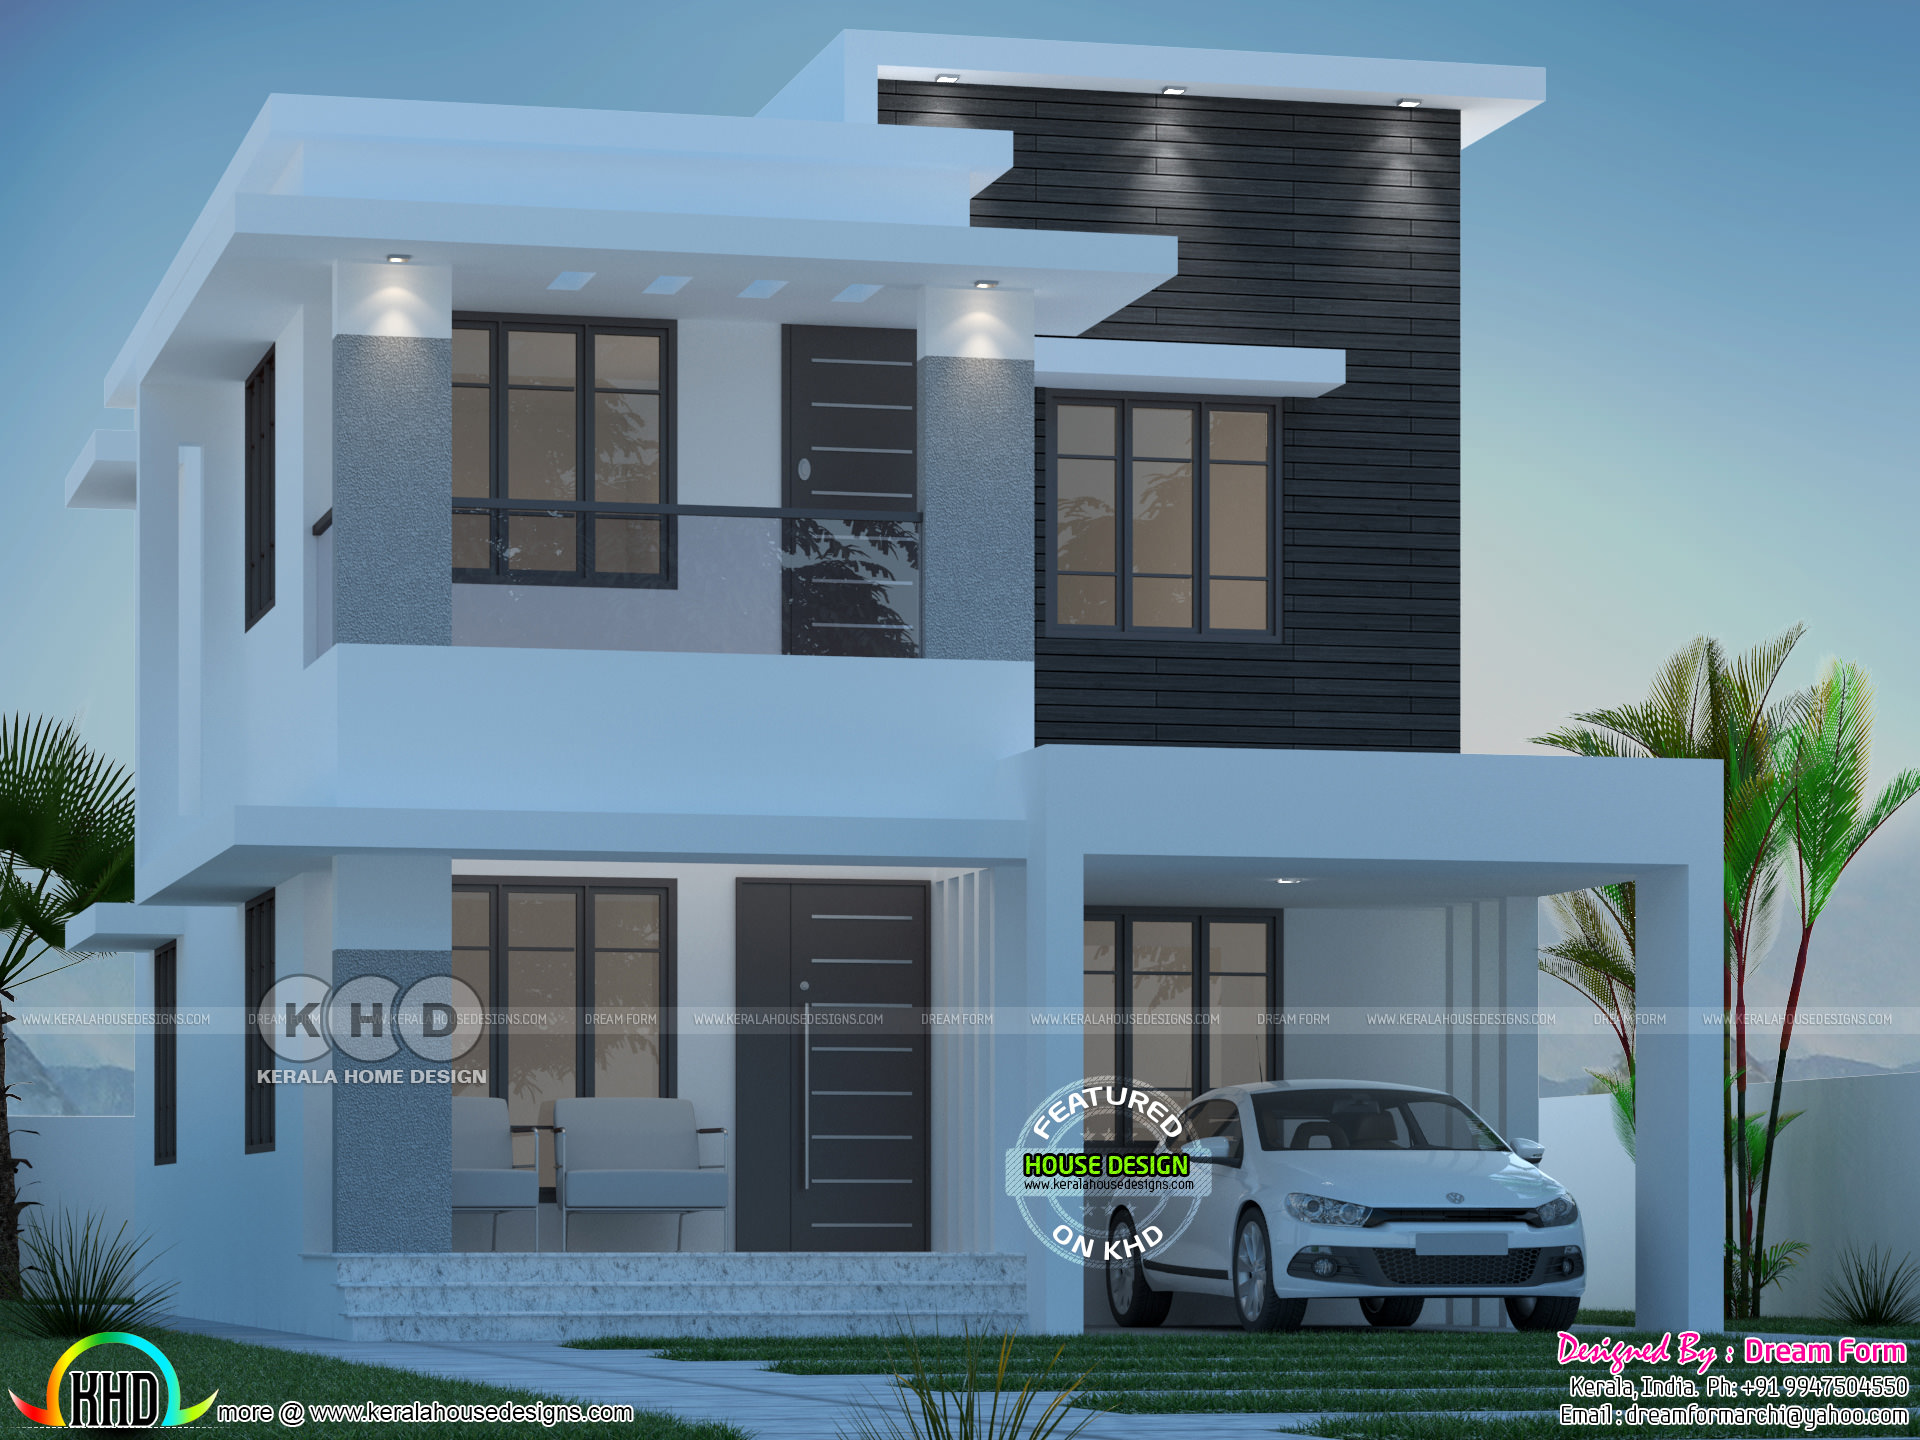 4 bedroom 1835 sq ft modern home design Kerala home 